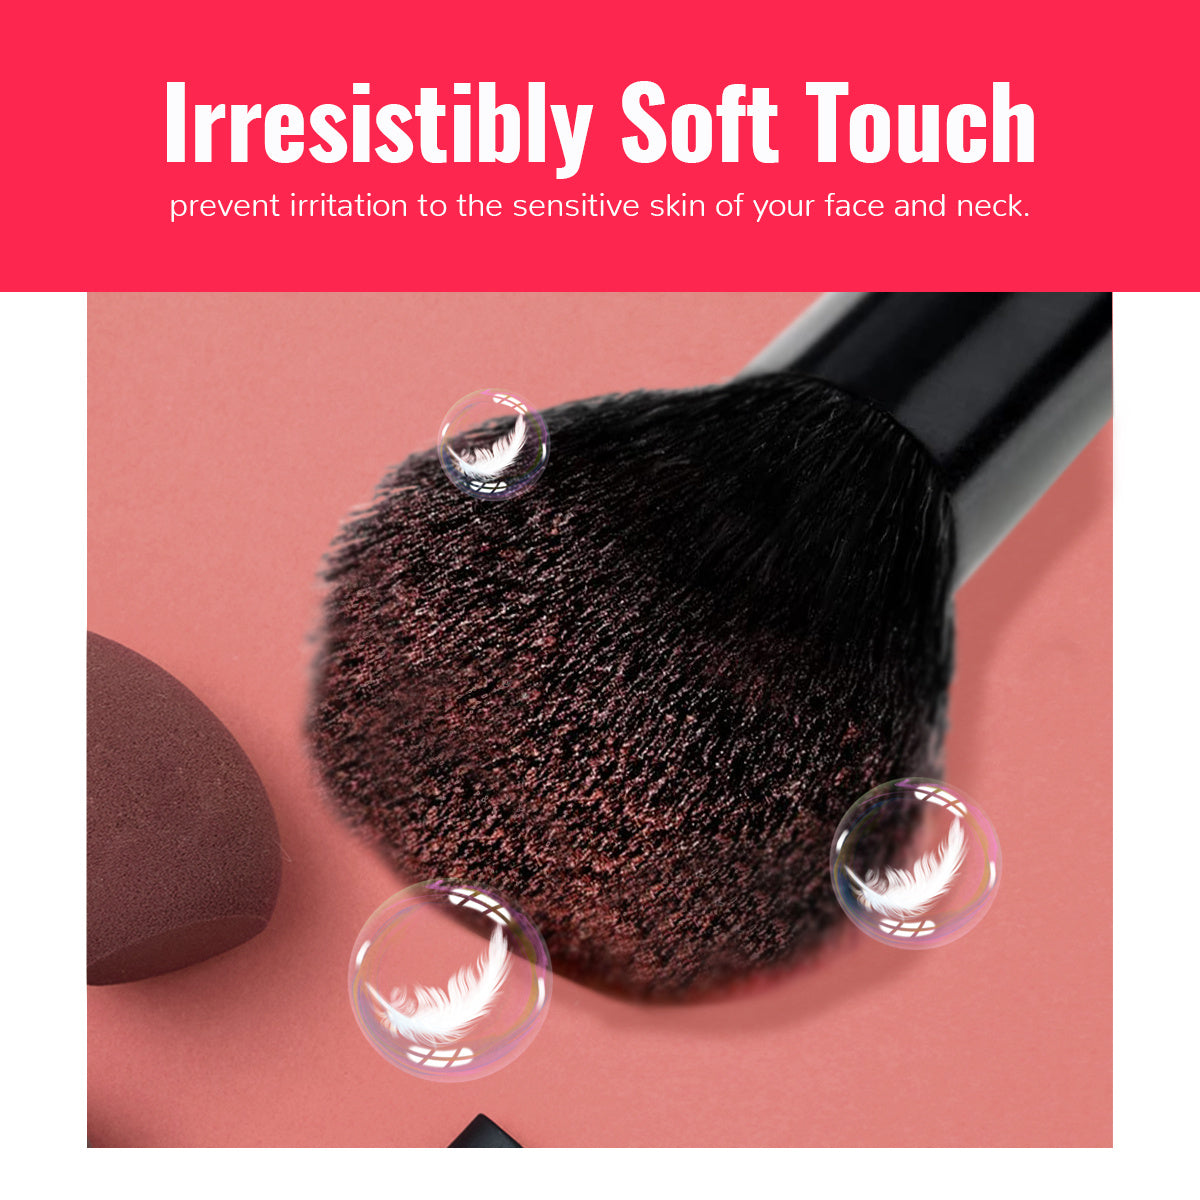 Total 32pcs Cosmetics Makeup Brushes Contains Powder Brush